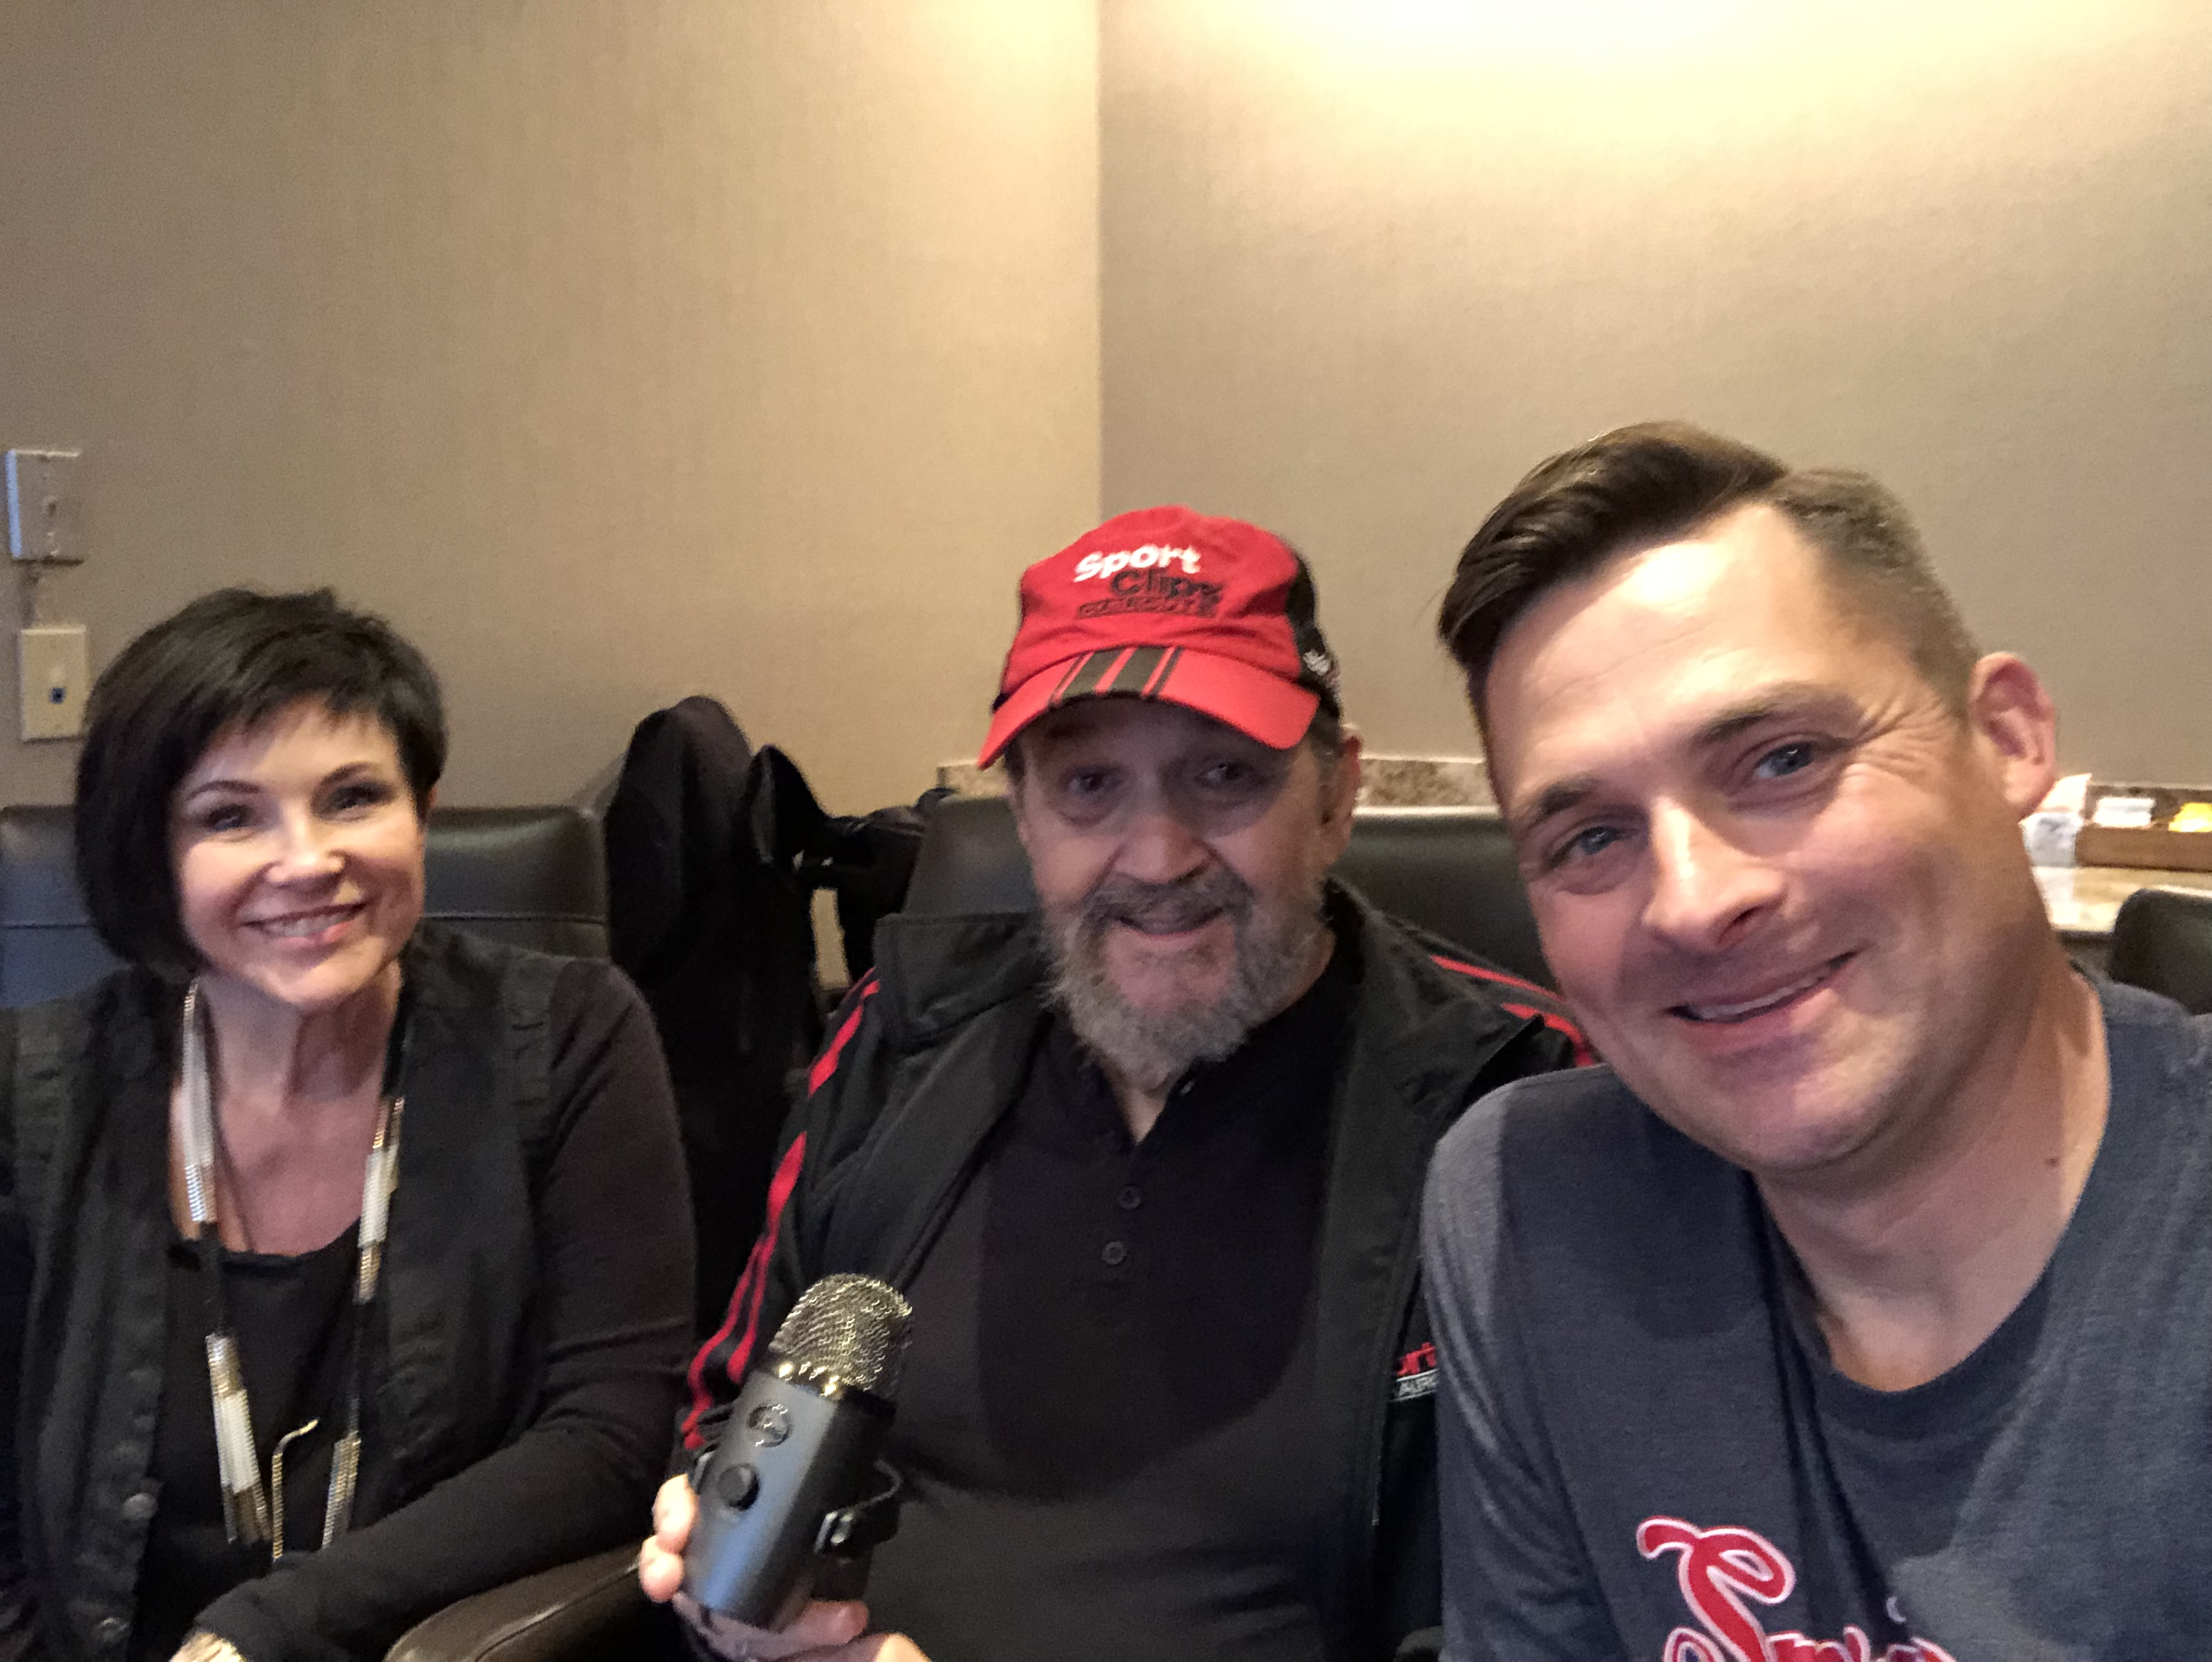 Chad Jordan, Tommy Callahan and Ramona Callahan holding a microphone